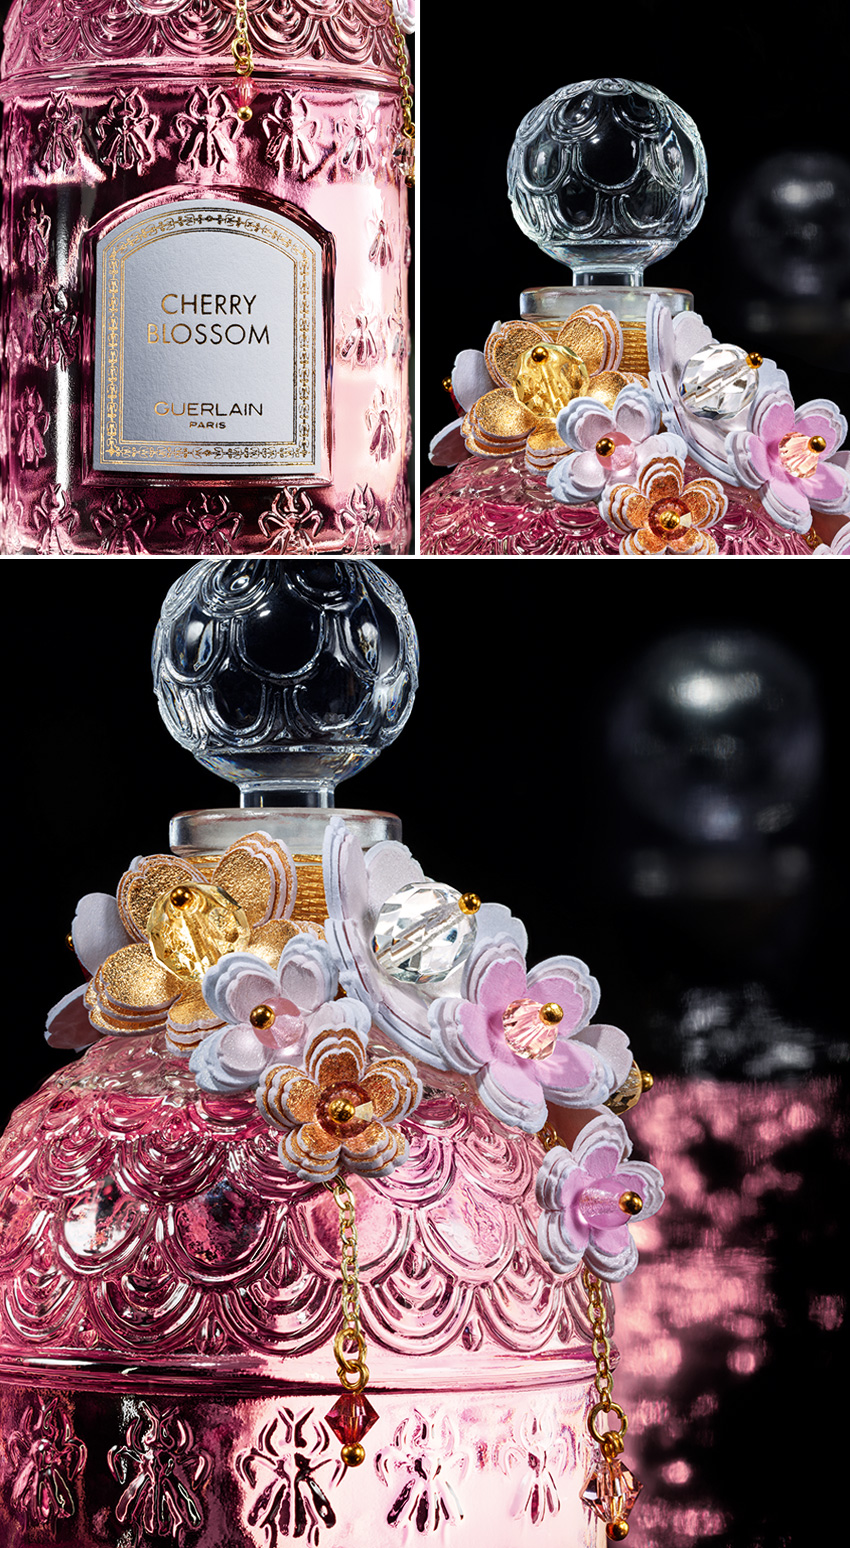 Guerlain Cherry Blossom bottle designed by French artist Lucie Touré